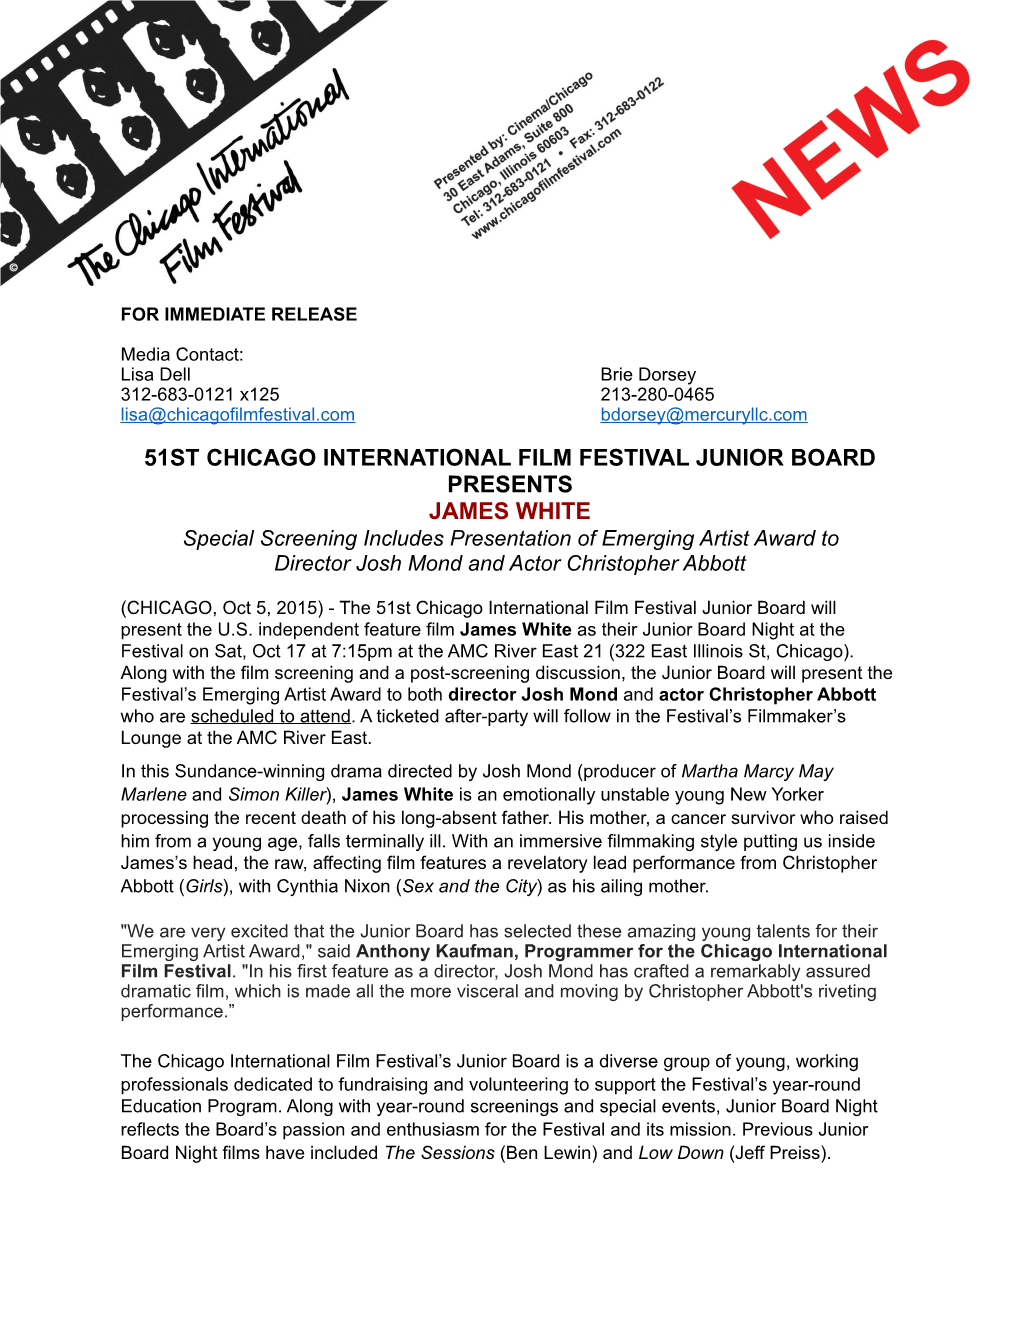 51St Chicago International Film Festival Junior Board